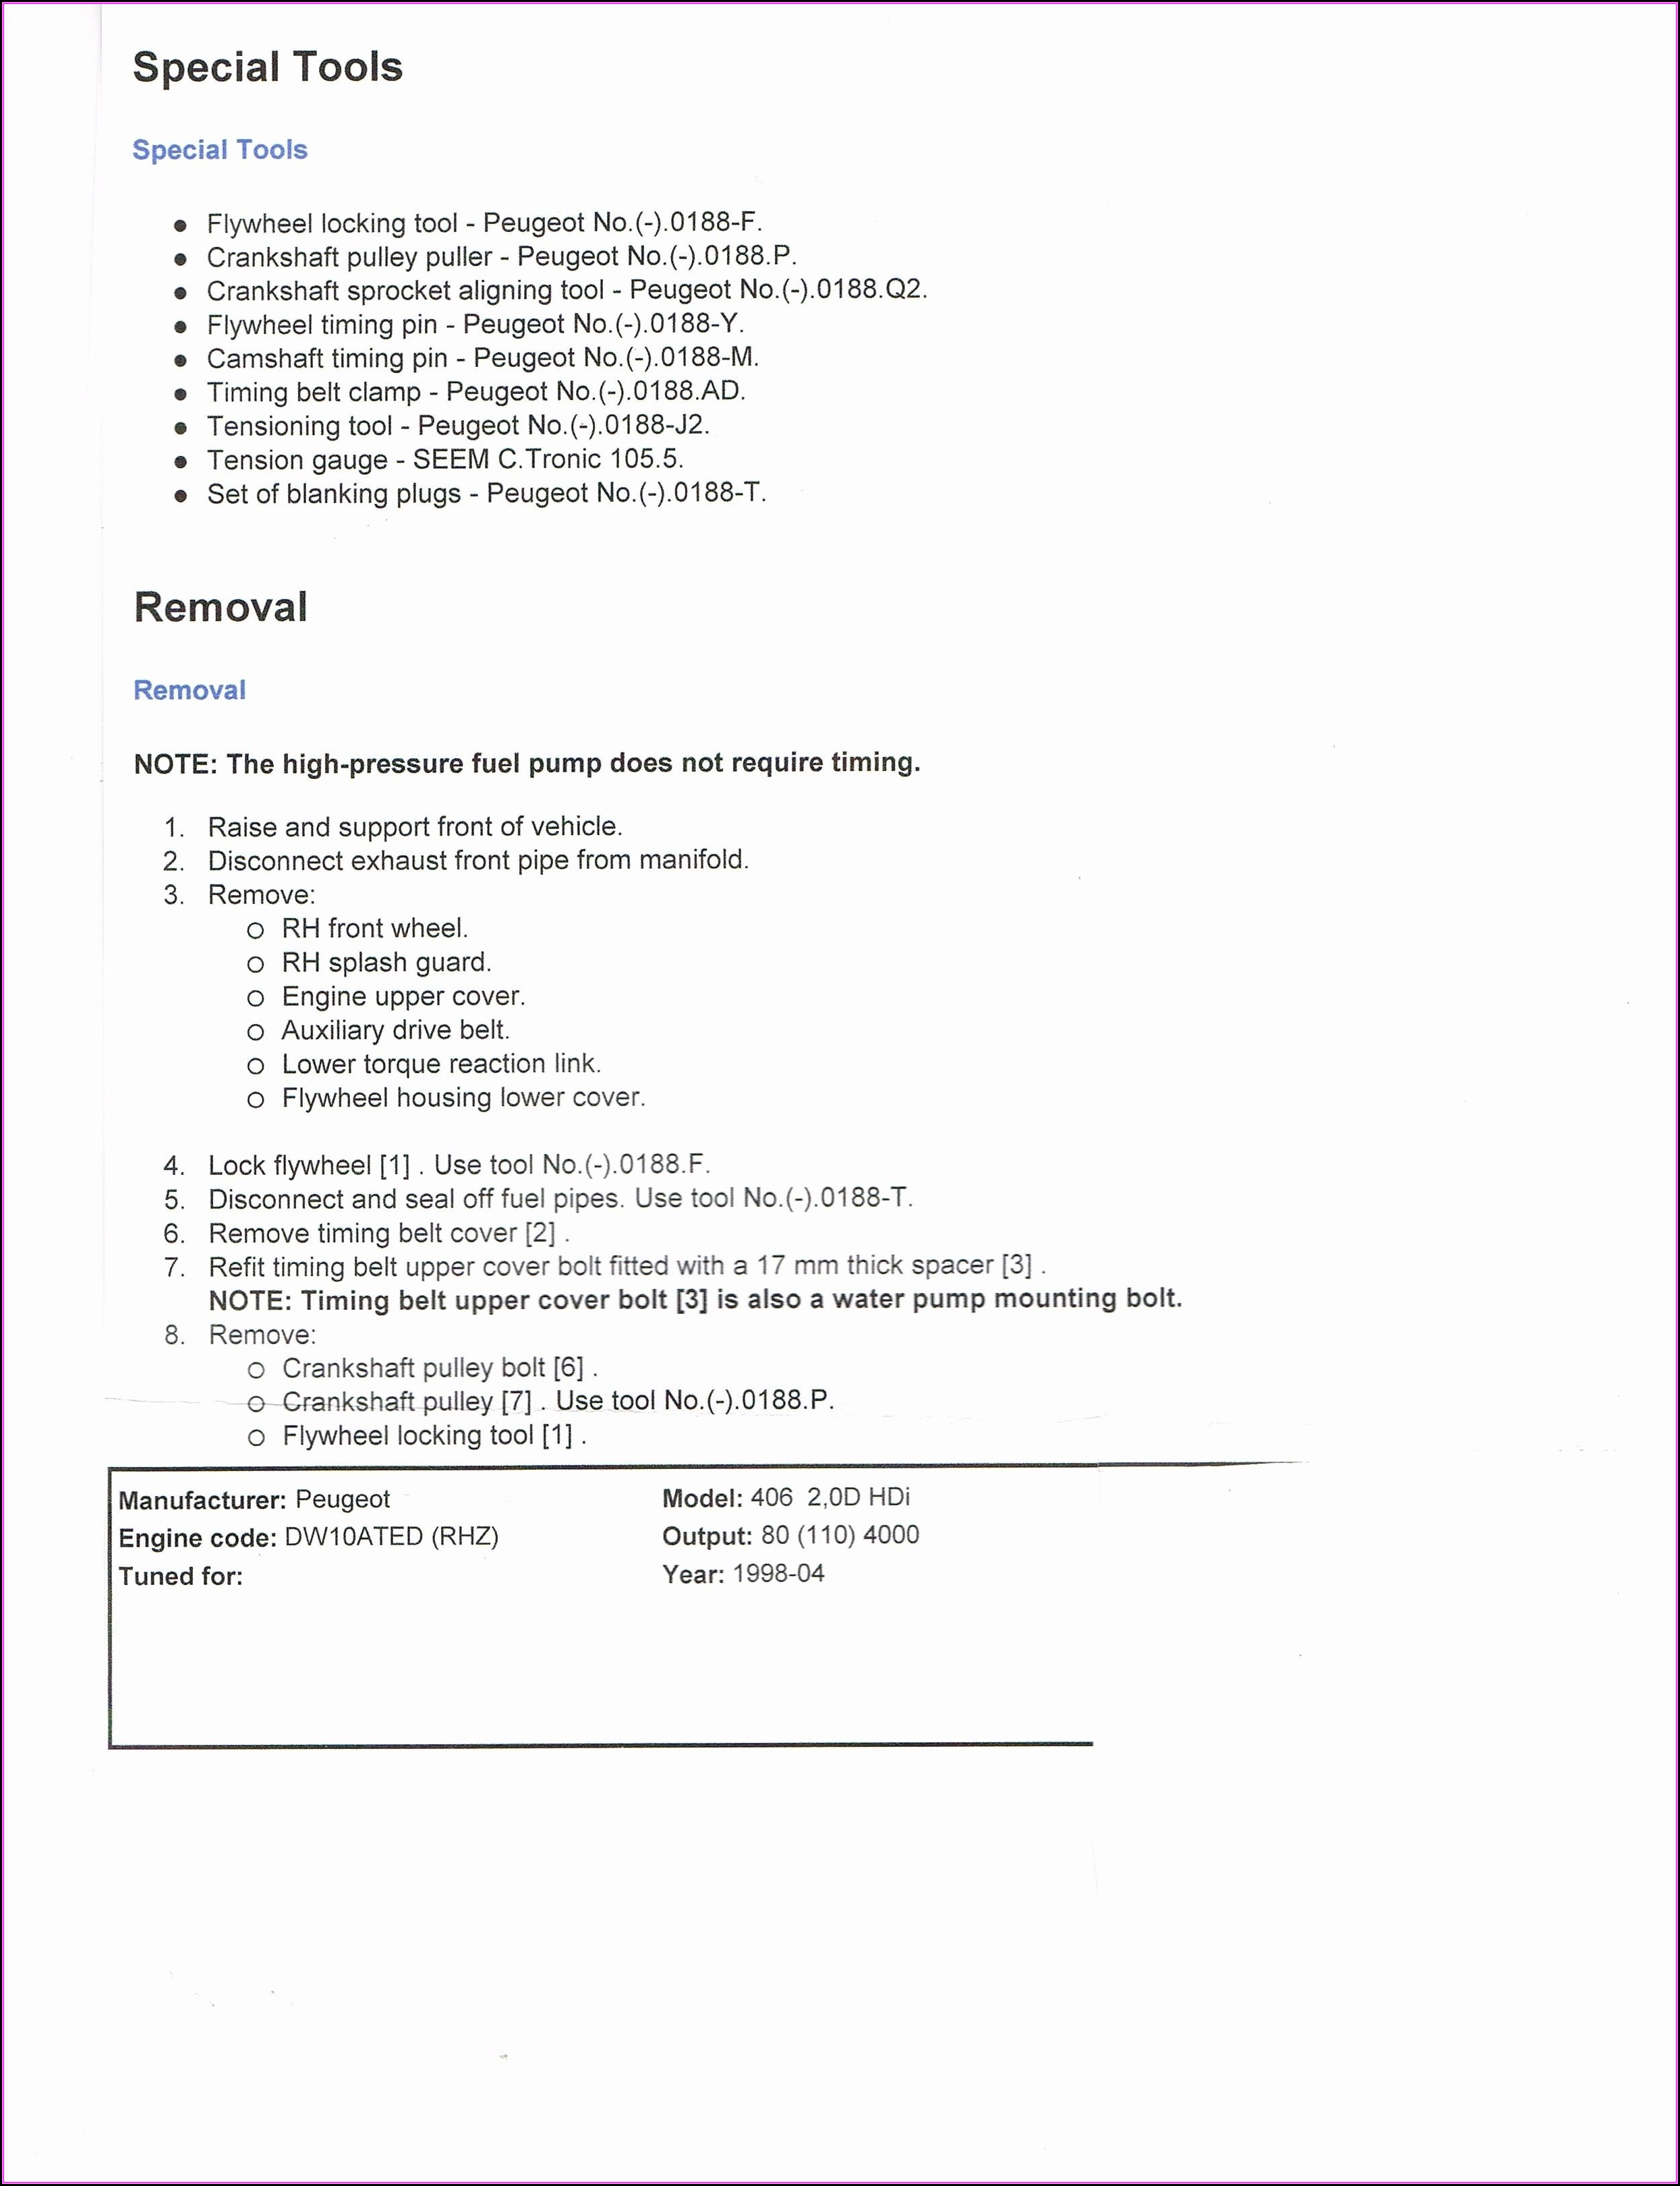 Print Free Resume Form